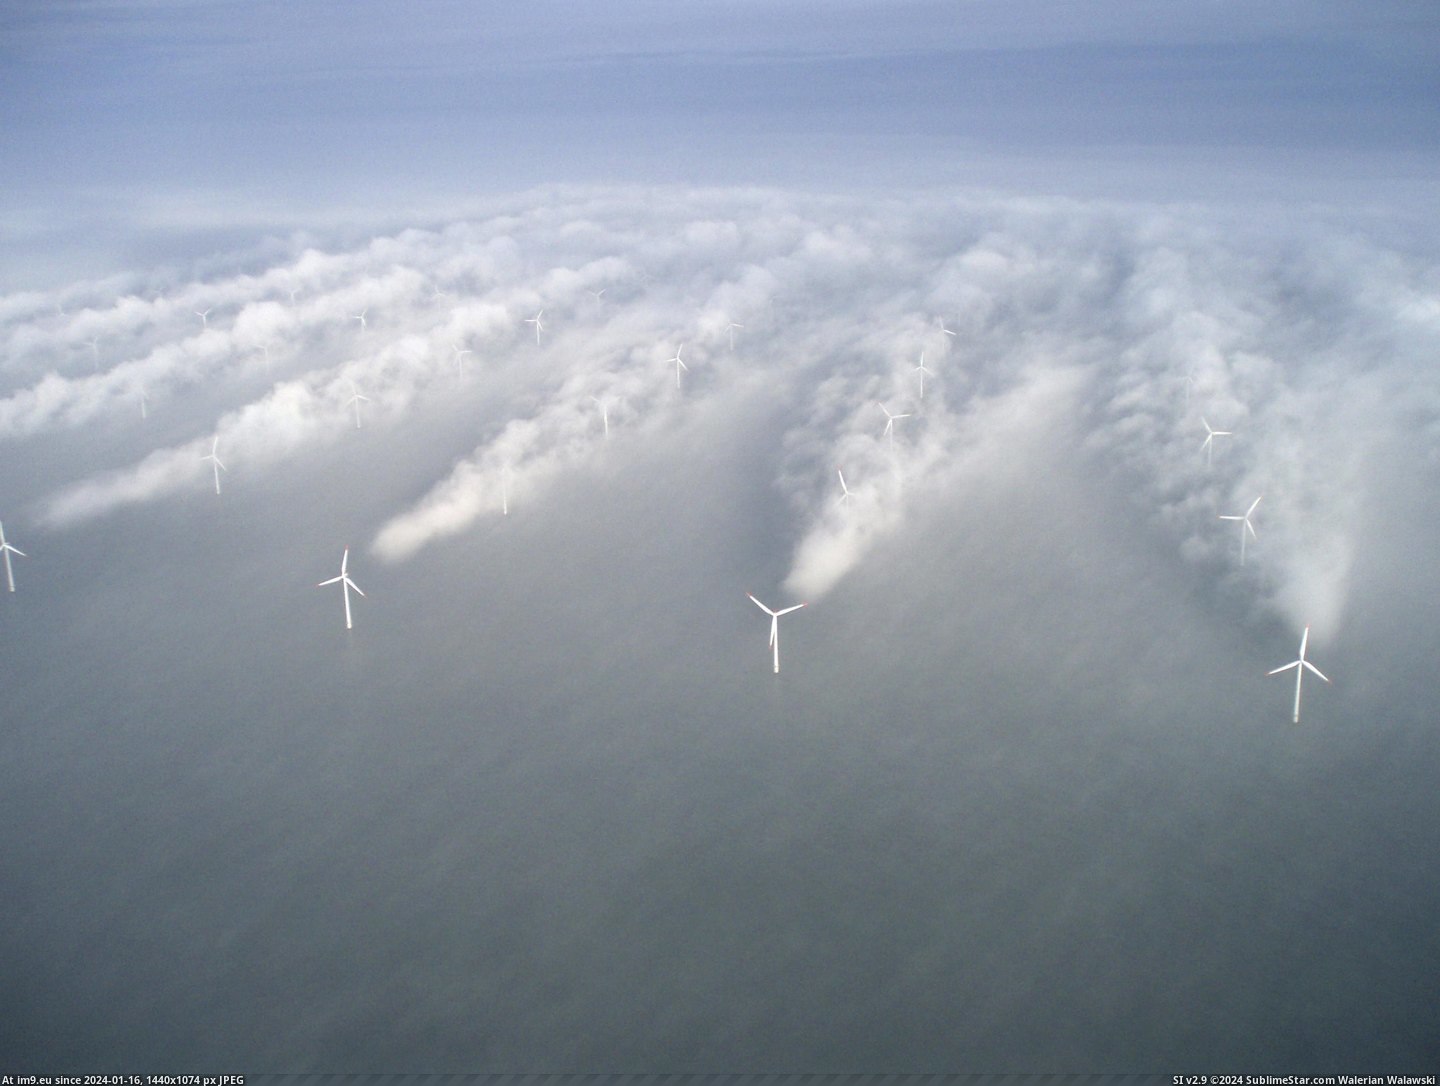 #Farm #Fog #Creating #Wind #Denmark [Pics] Wind farm in Denmark creating fog. Pic. (Изображение из альбом My r/PICS favs))